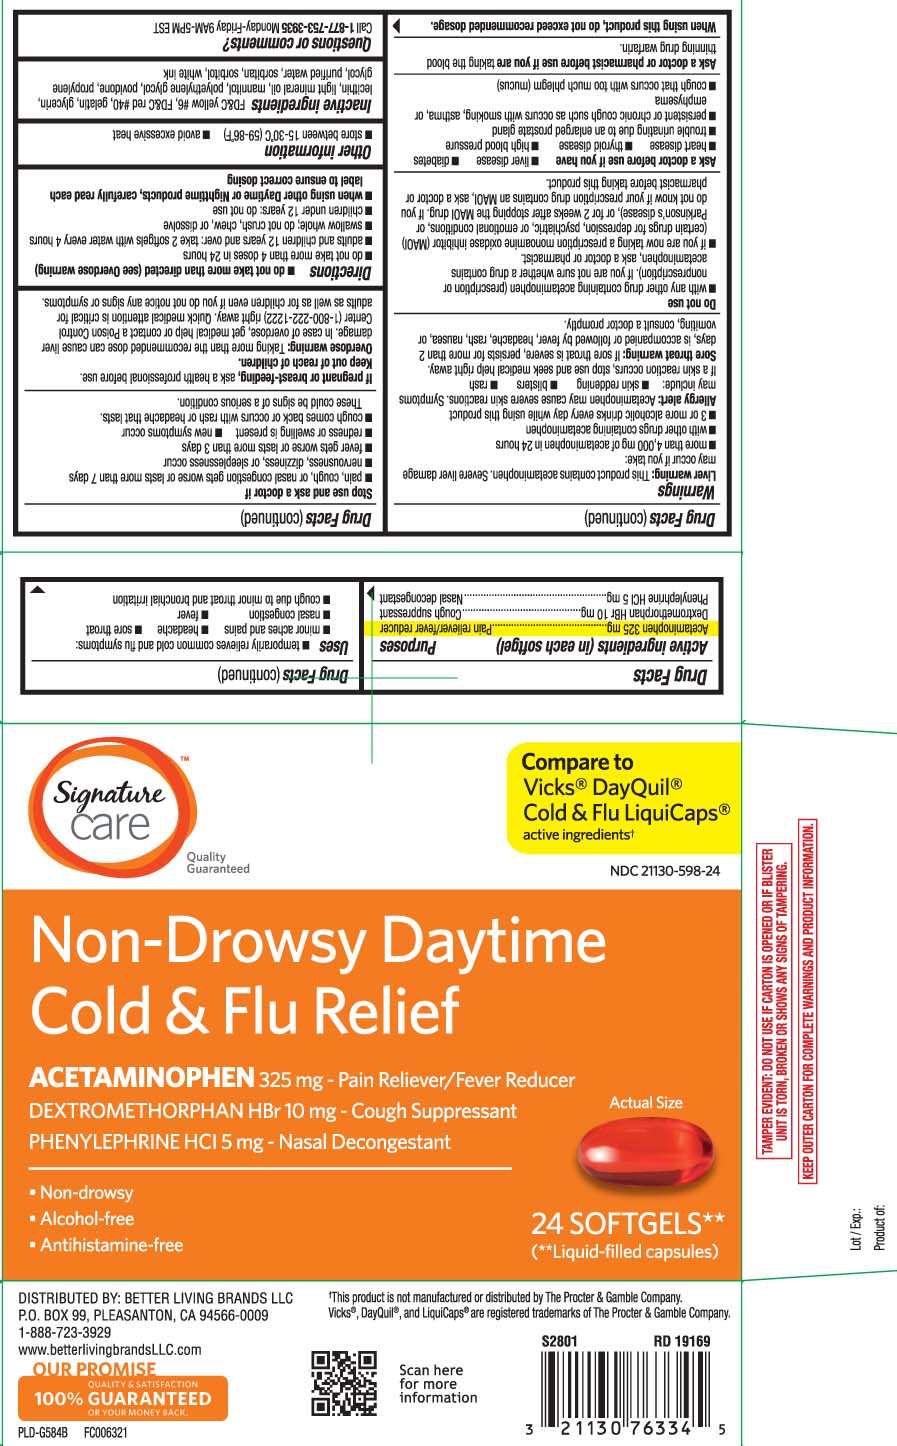 Acetaminophen 325 mg, Dextromethorphan HBr 10 mg, Phenylephrine HCL 5 mg